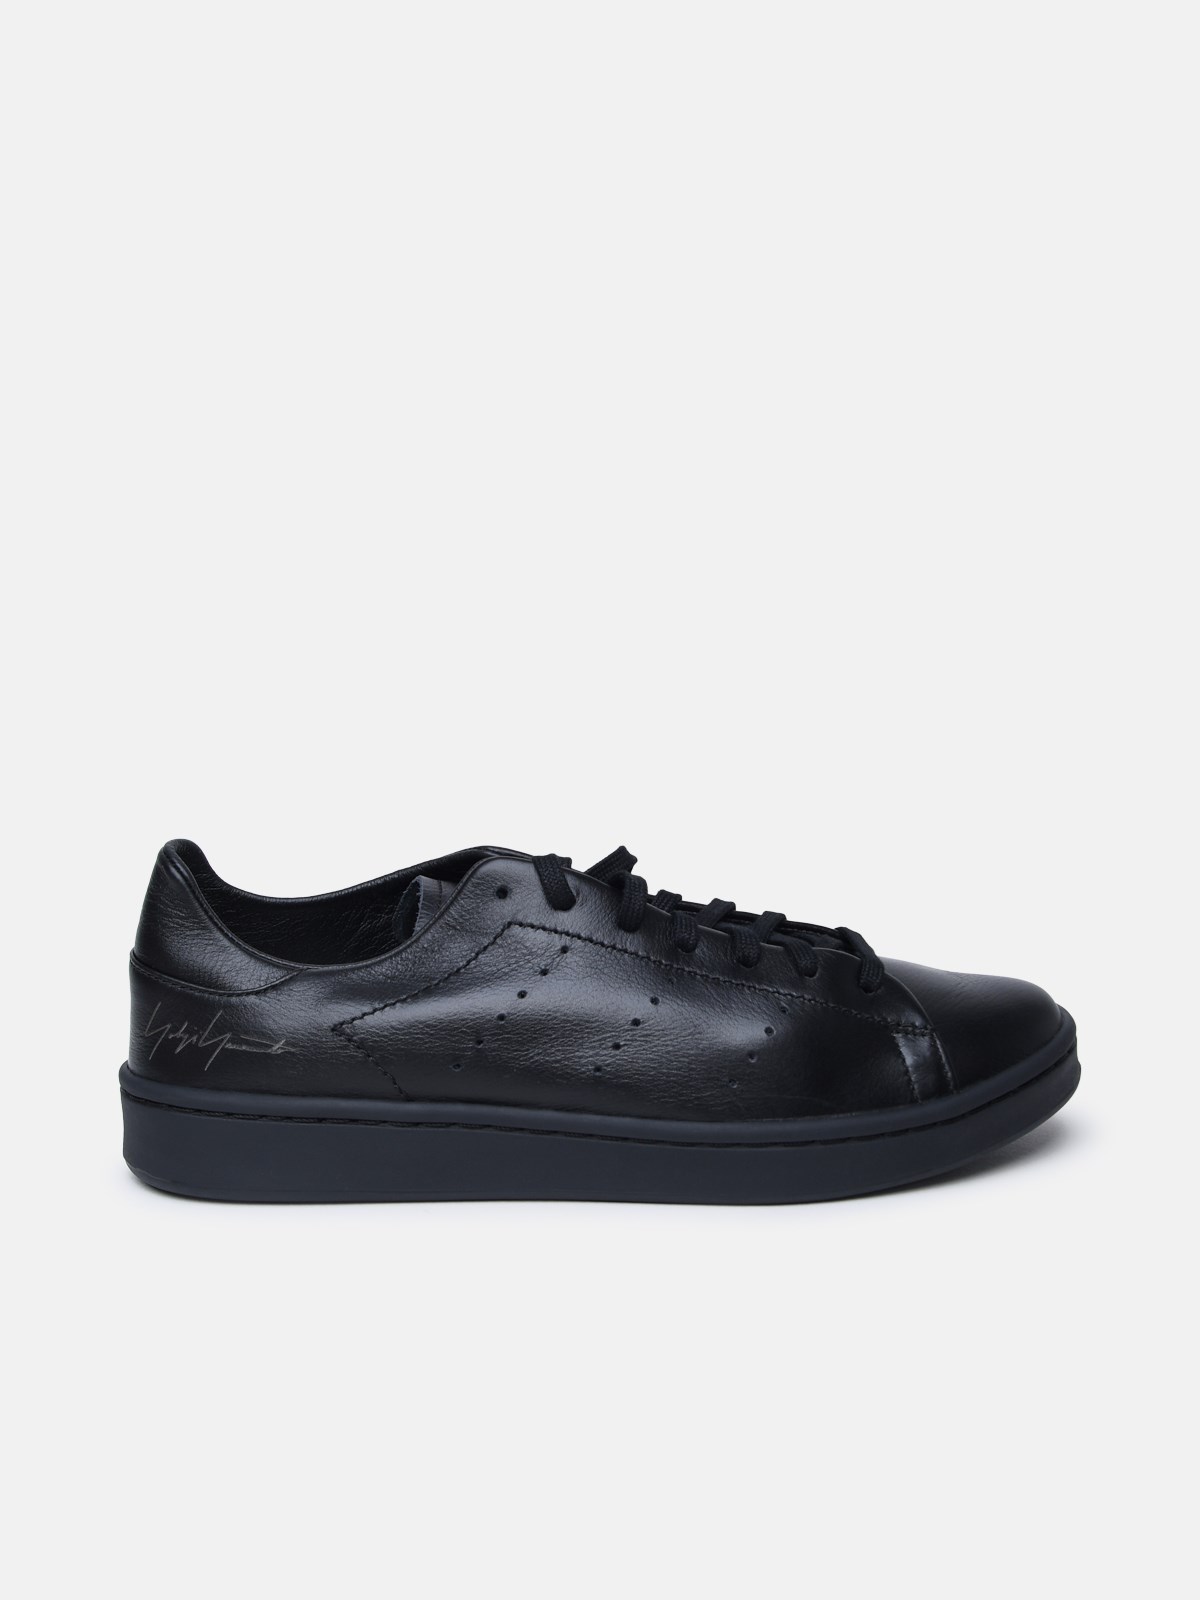 Y-3 Black Leather Sneakers